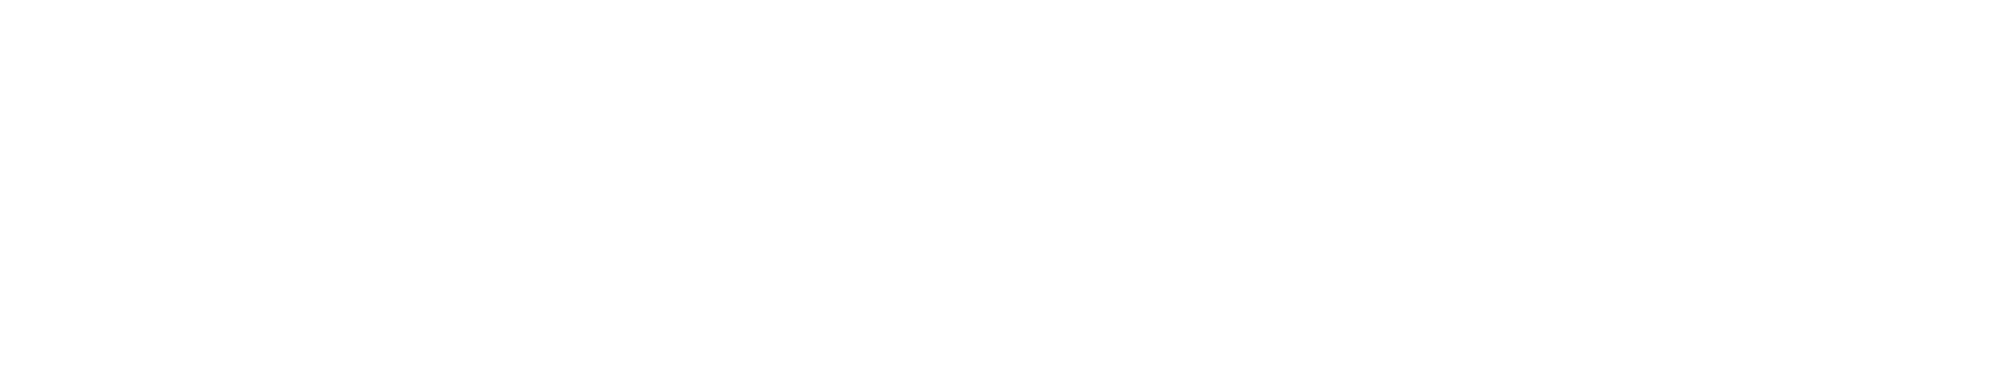 Admin curve image